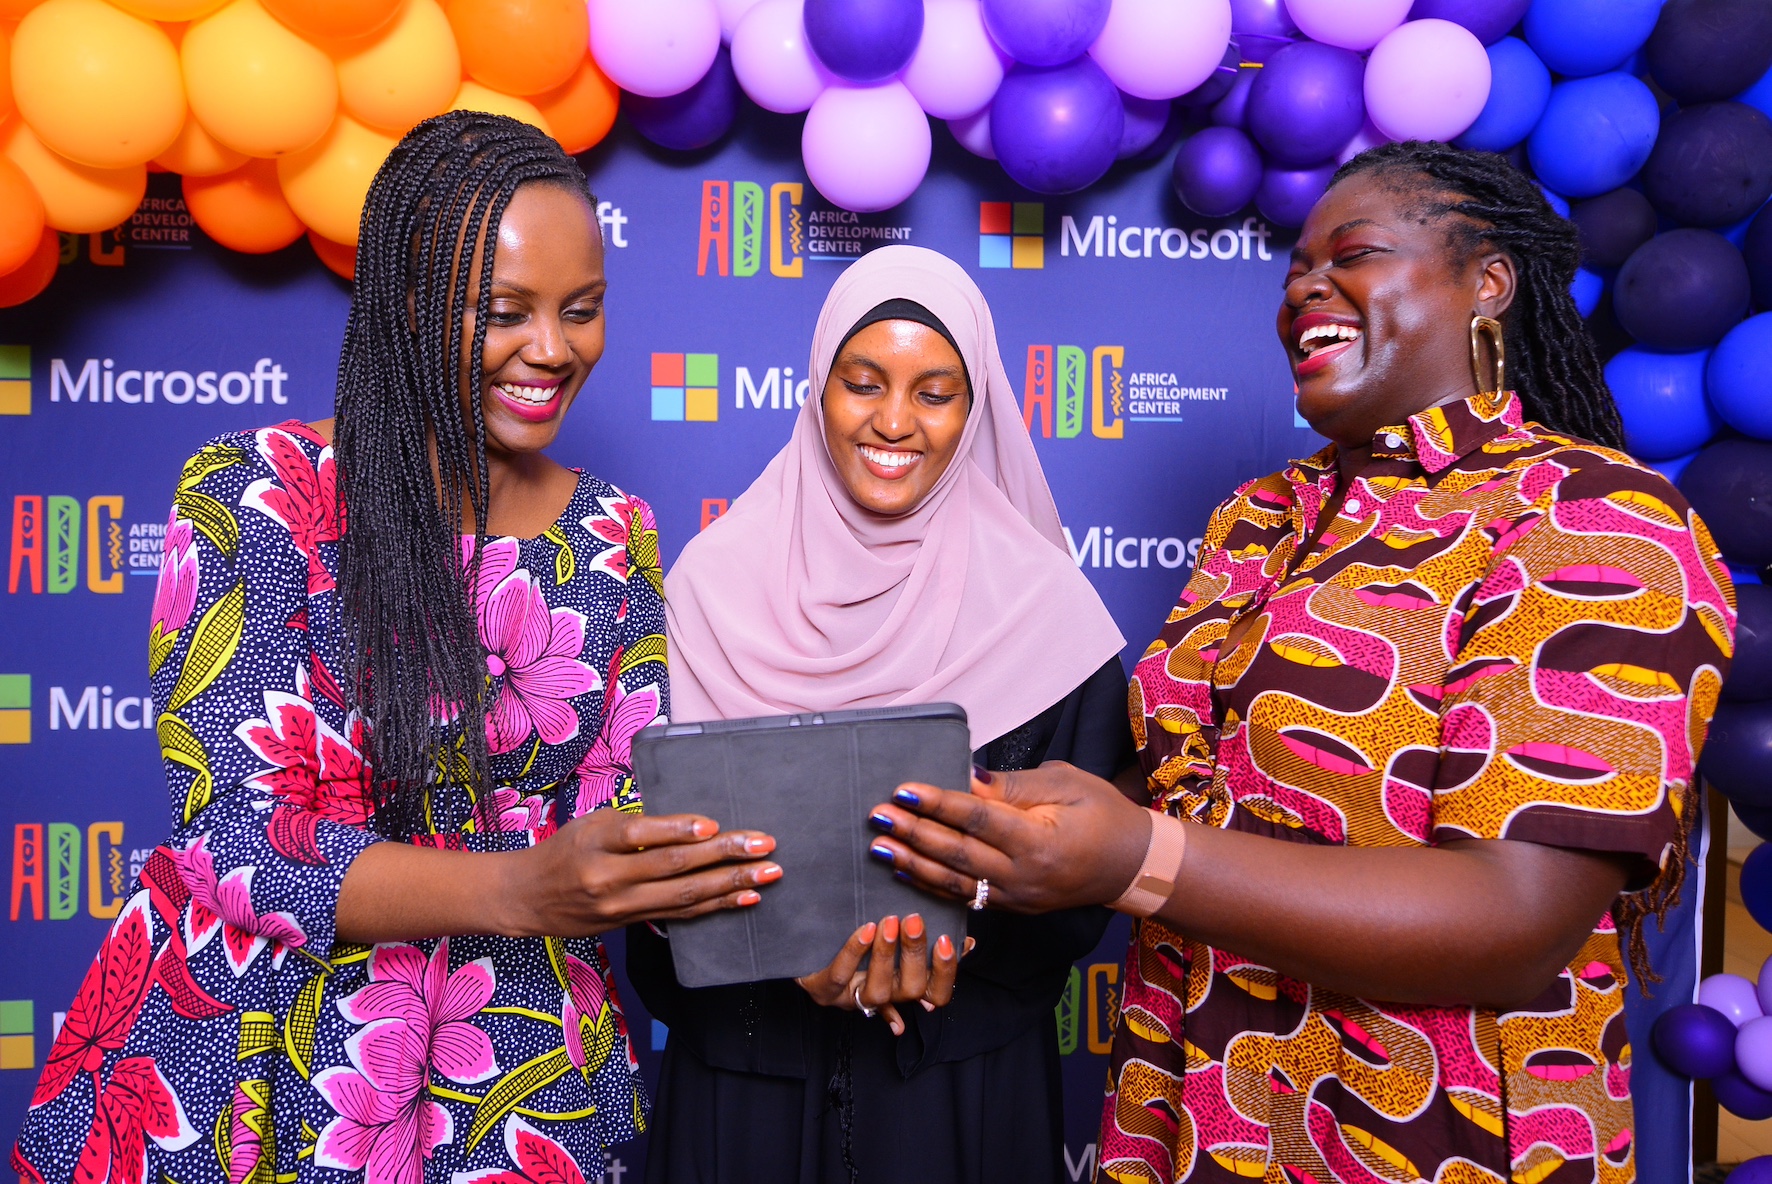 Microsoft ADC Launches WINS To Bridge Gender Gap